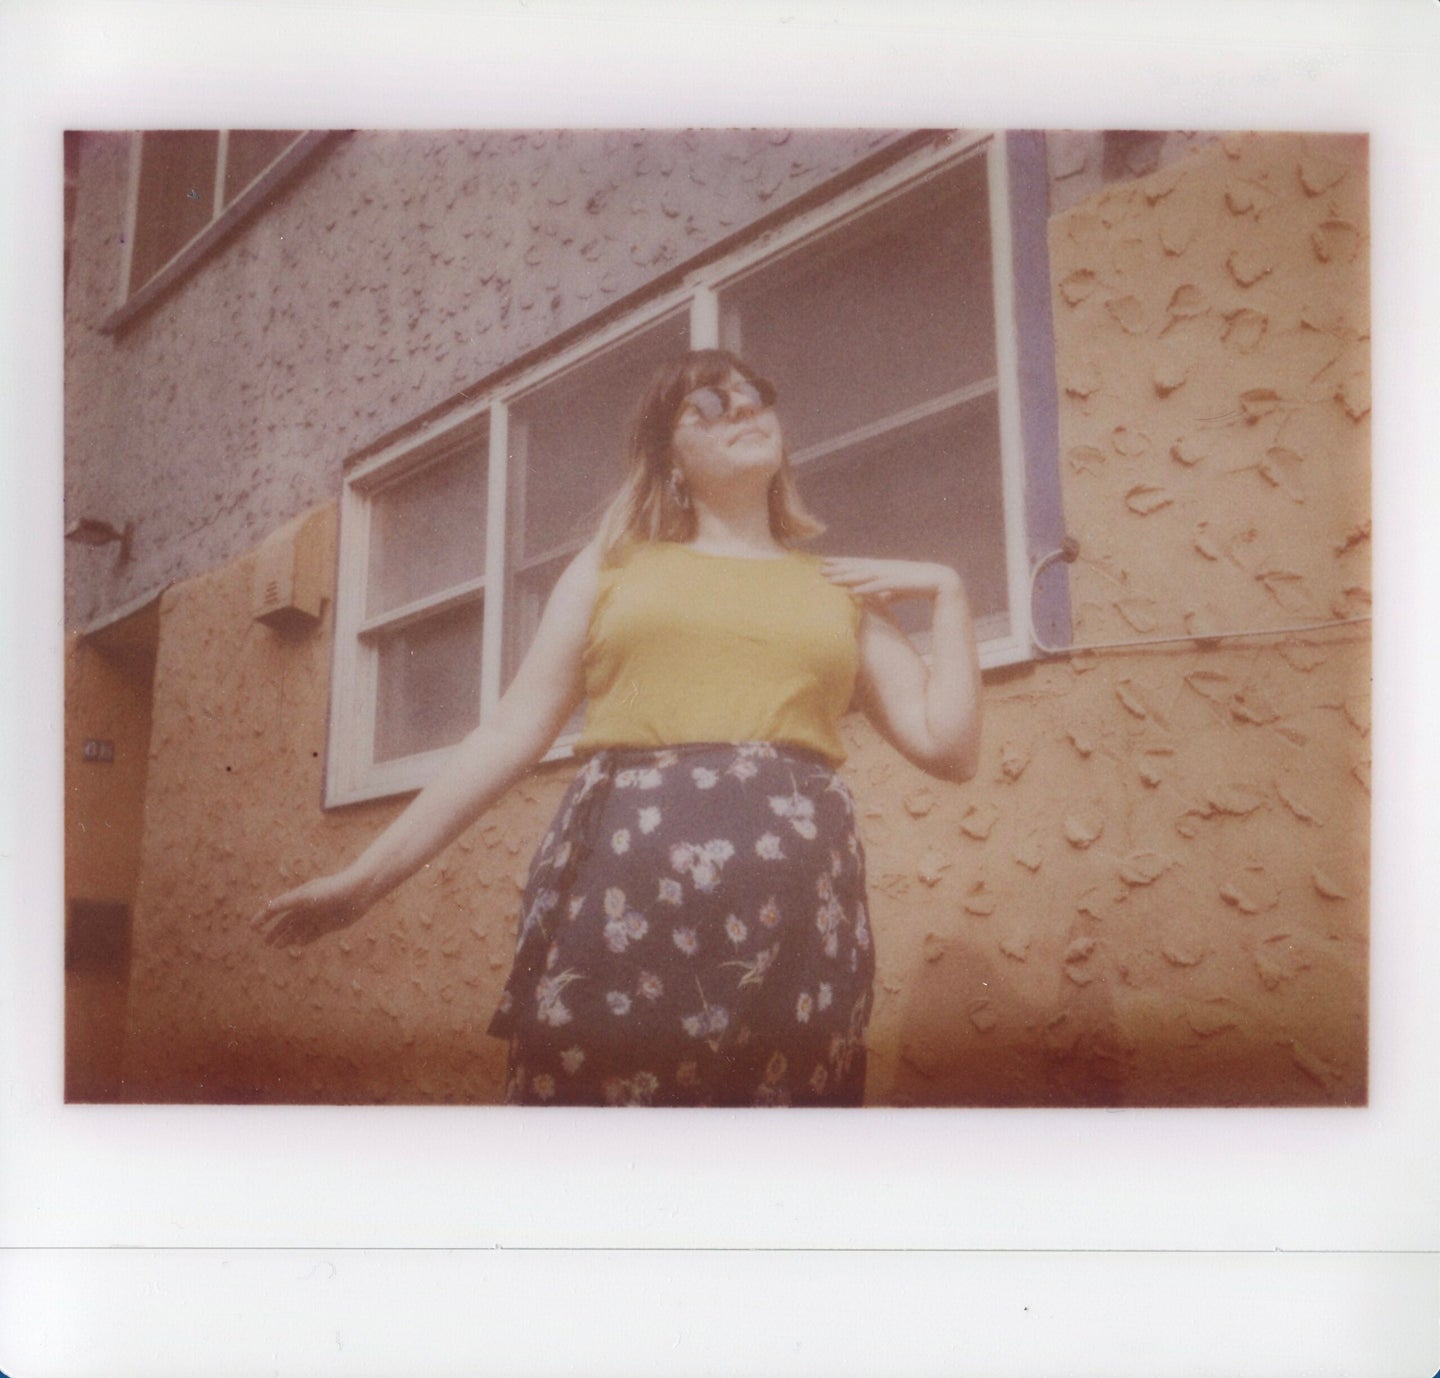 A sample photo shot with ultra rare Kodak Instant film.